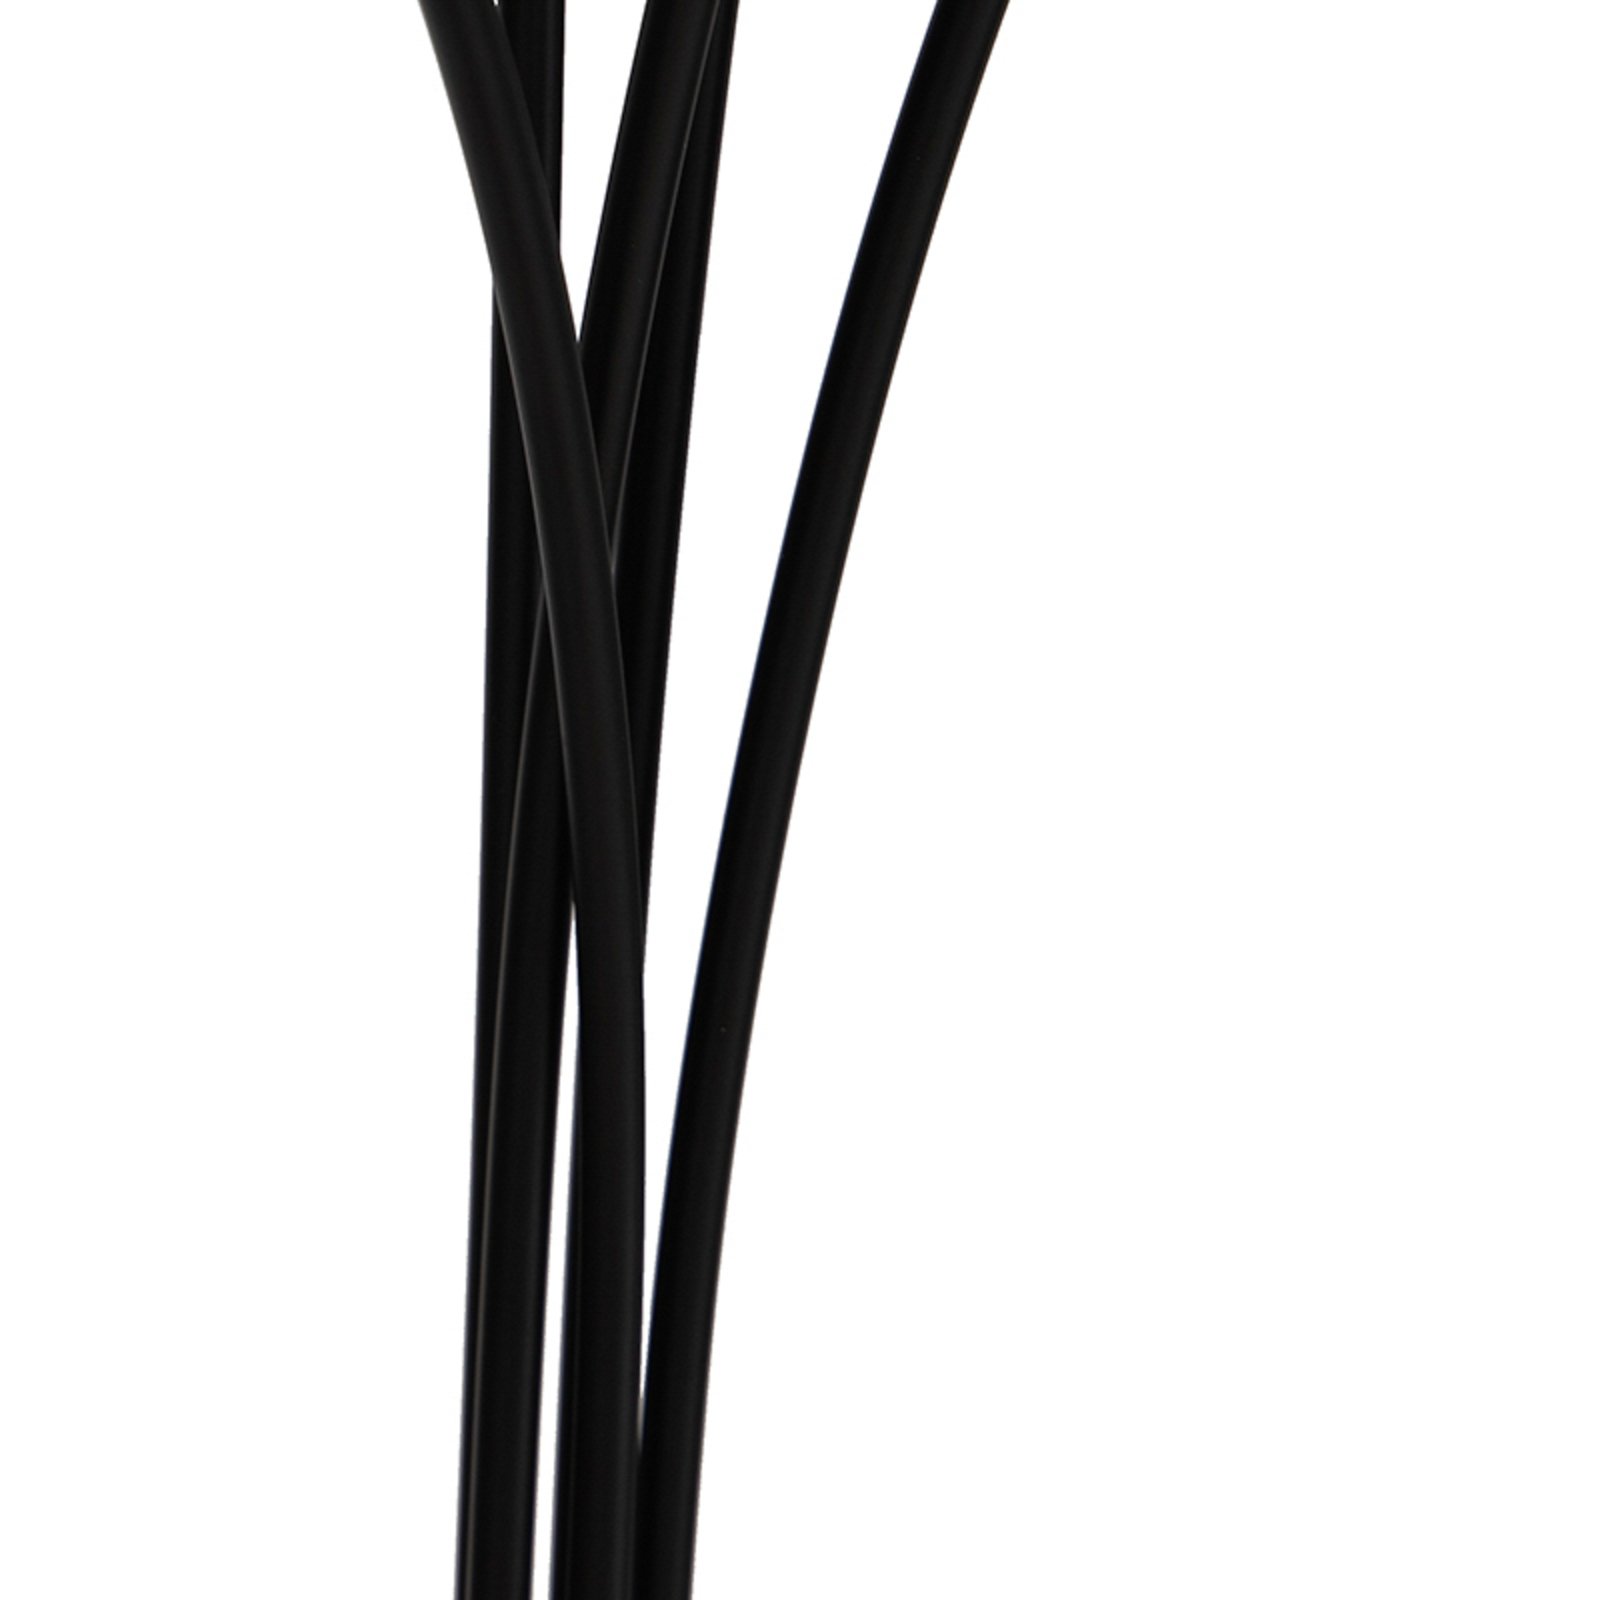 Lampa stojąca Sixties z pięcioma ramionami, czarna